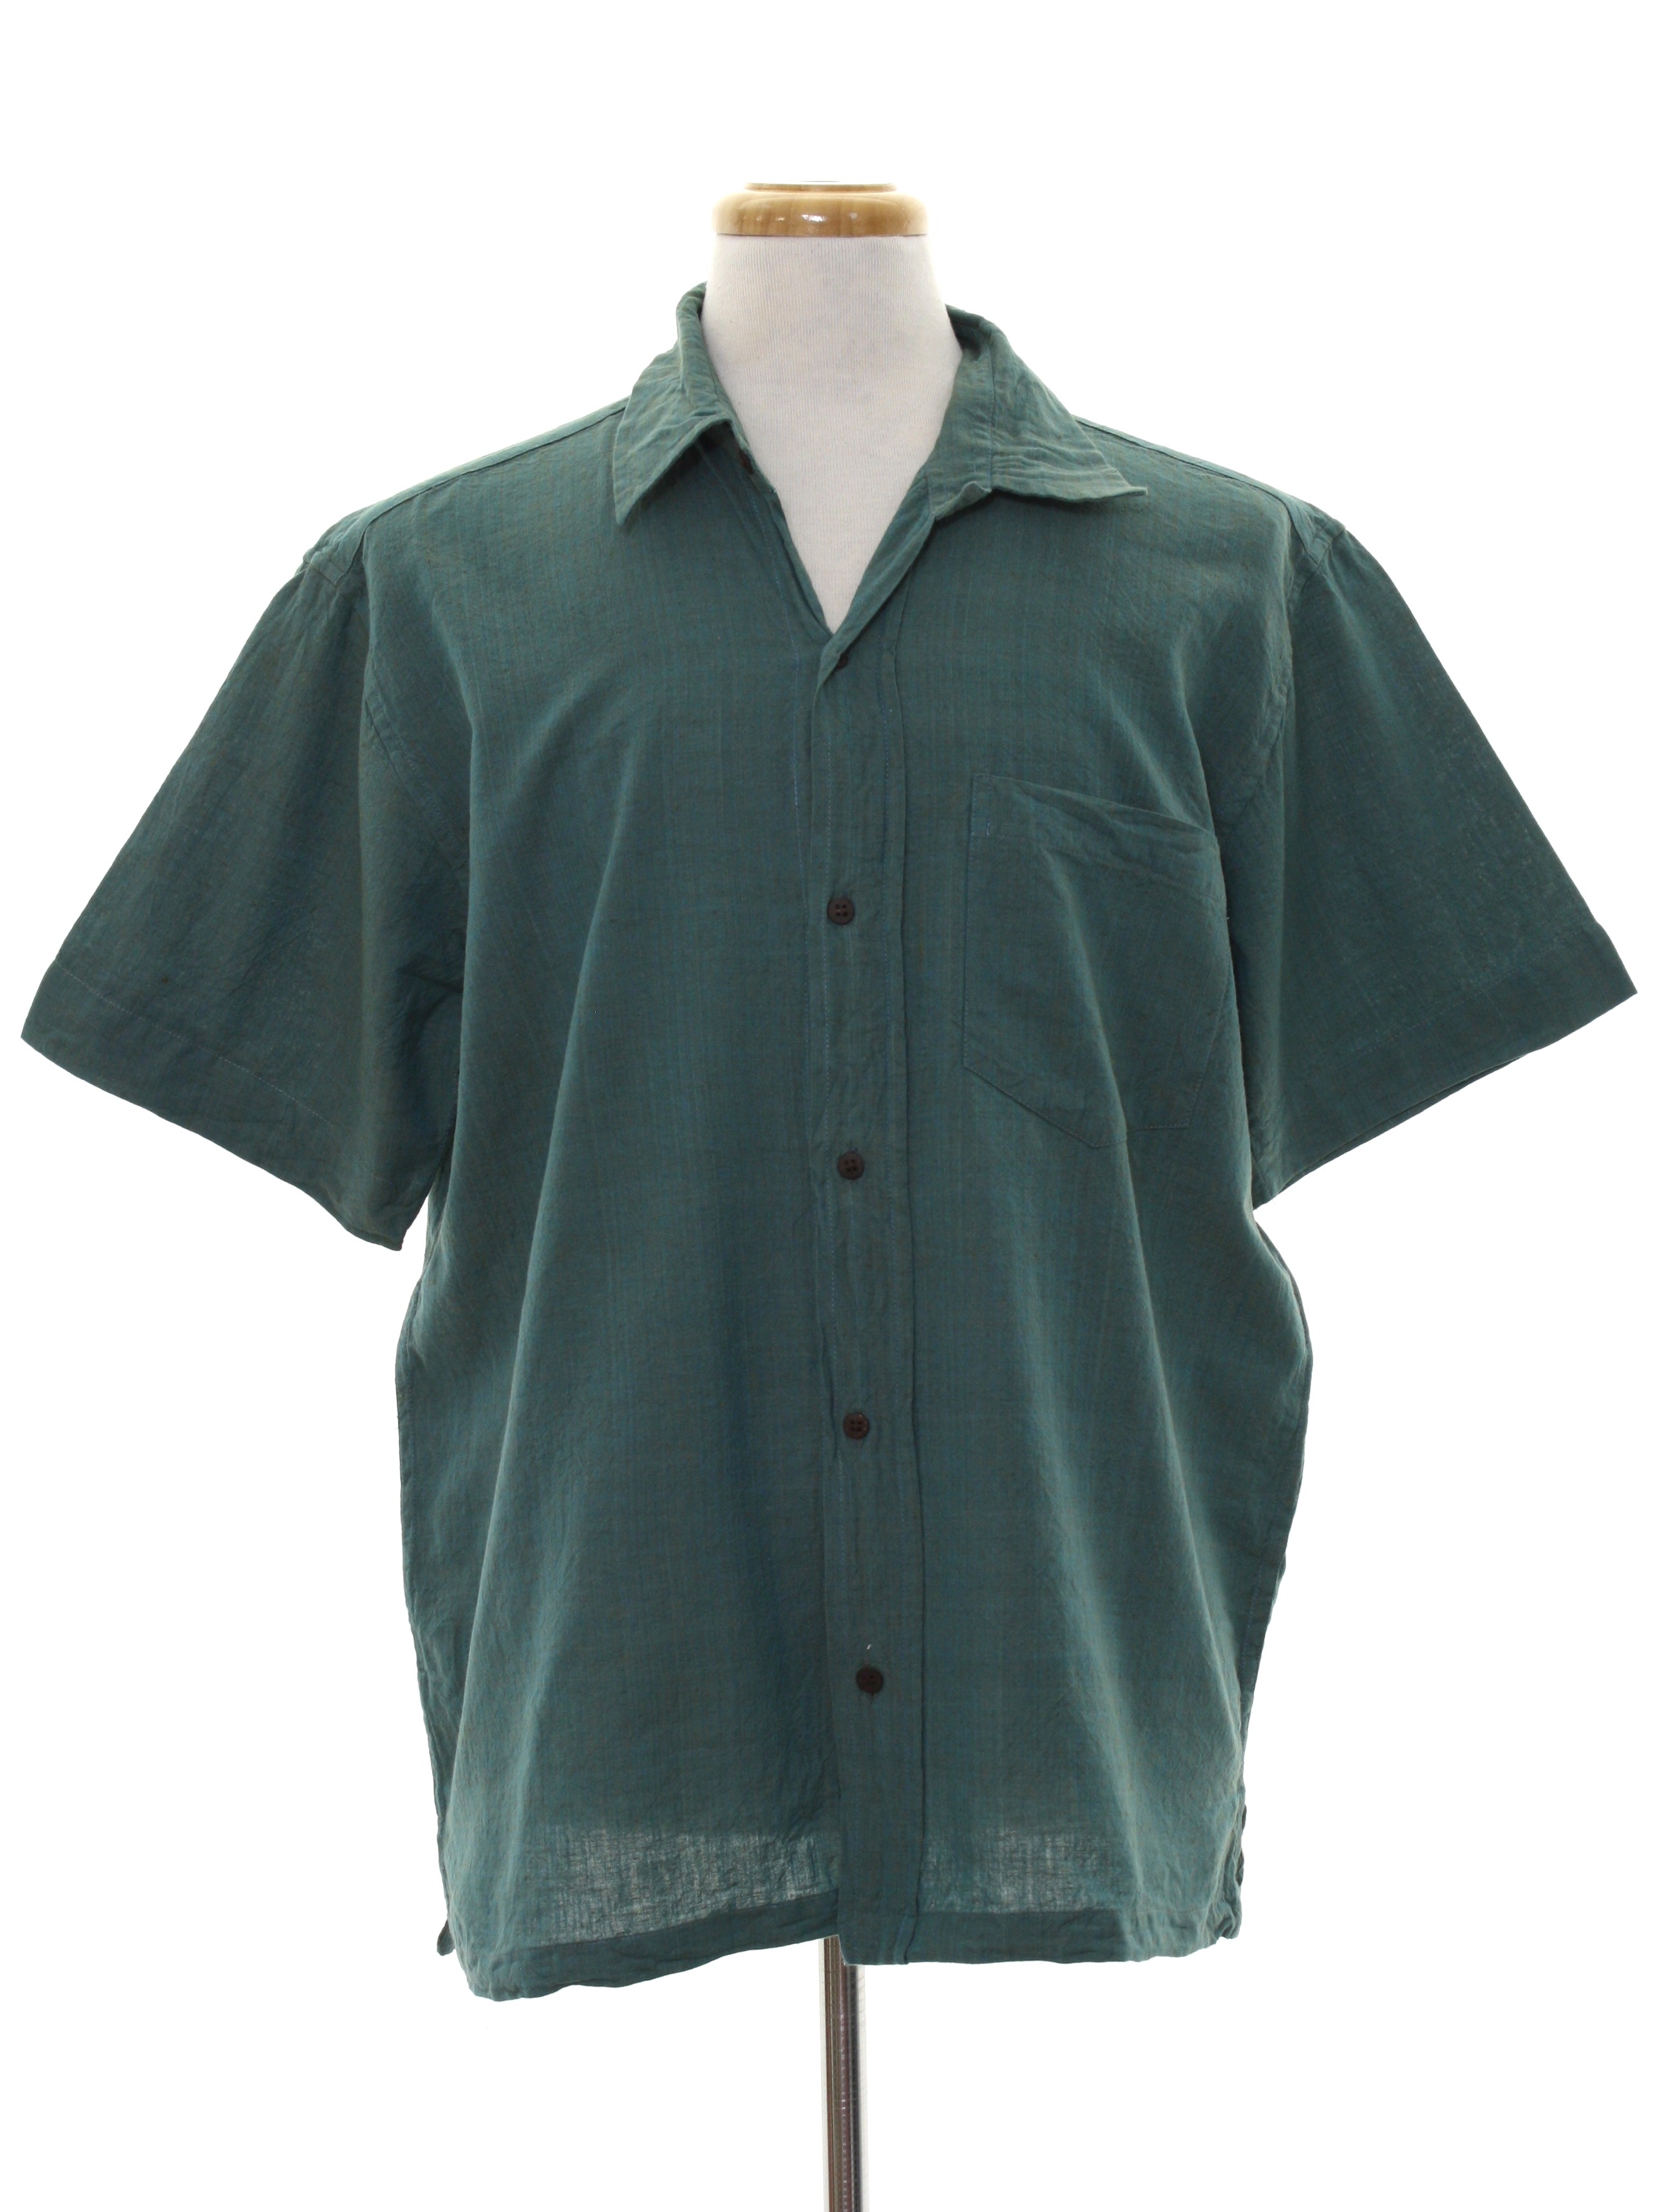 Hippie Shirt: 90s -Fabindia- Mens heathered sage green background ...